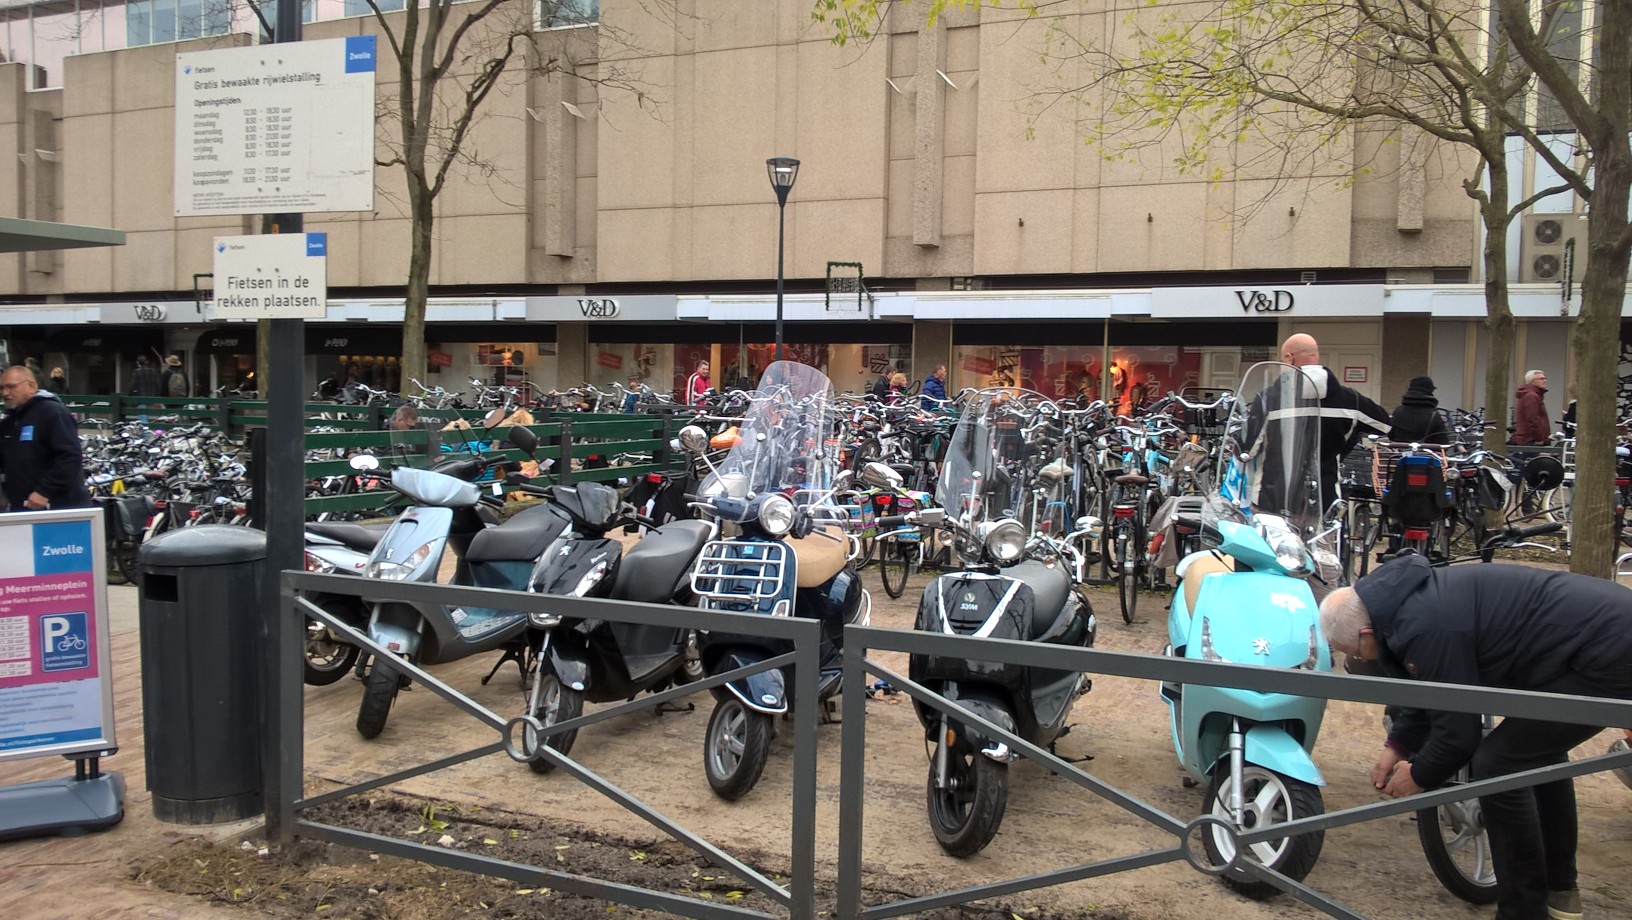 Foto: fietsparkeren op Meerminneplein